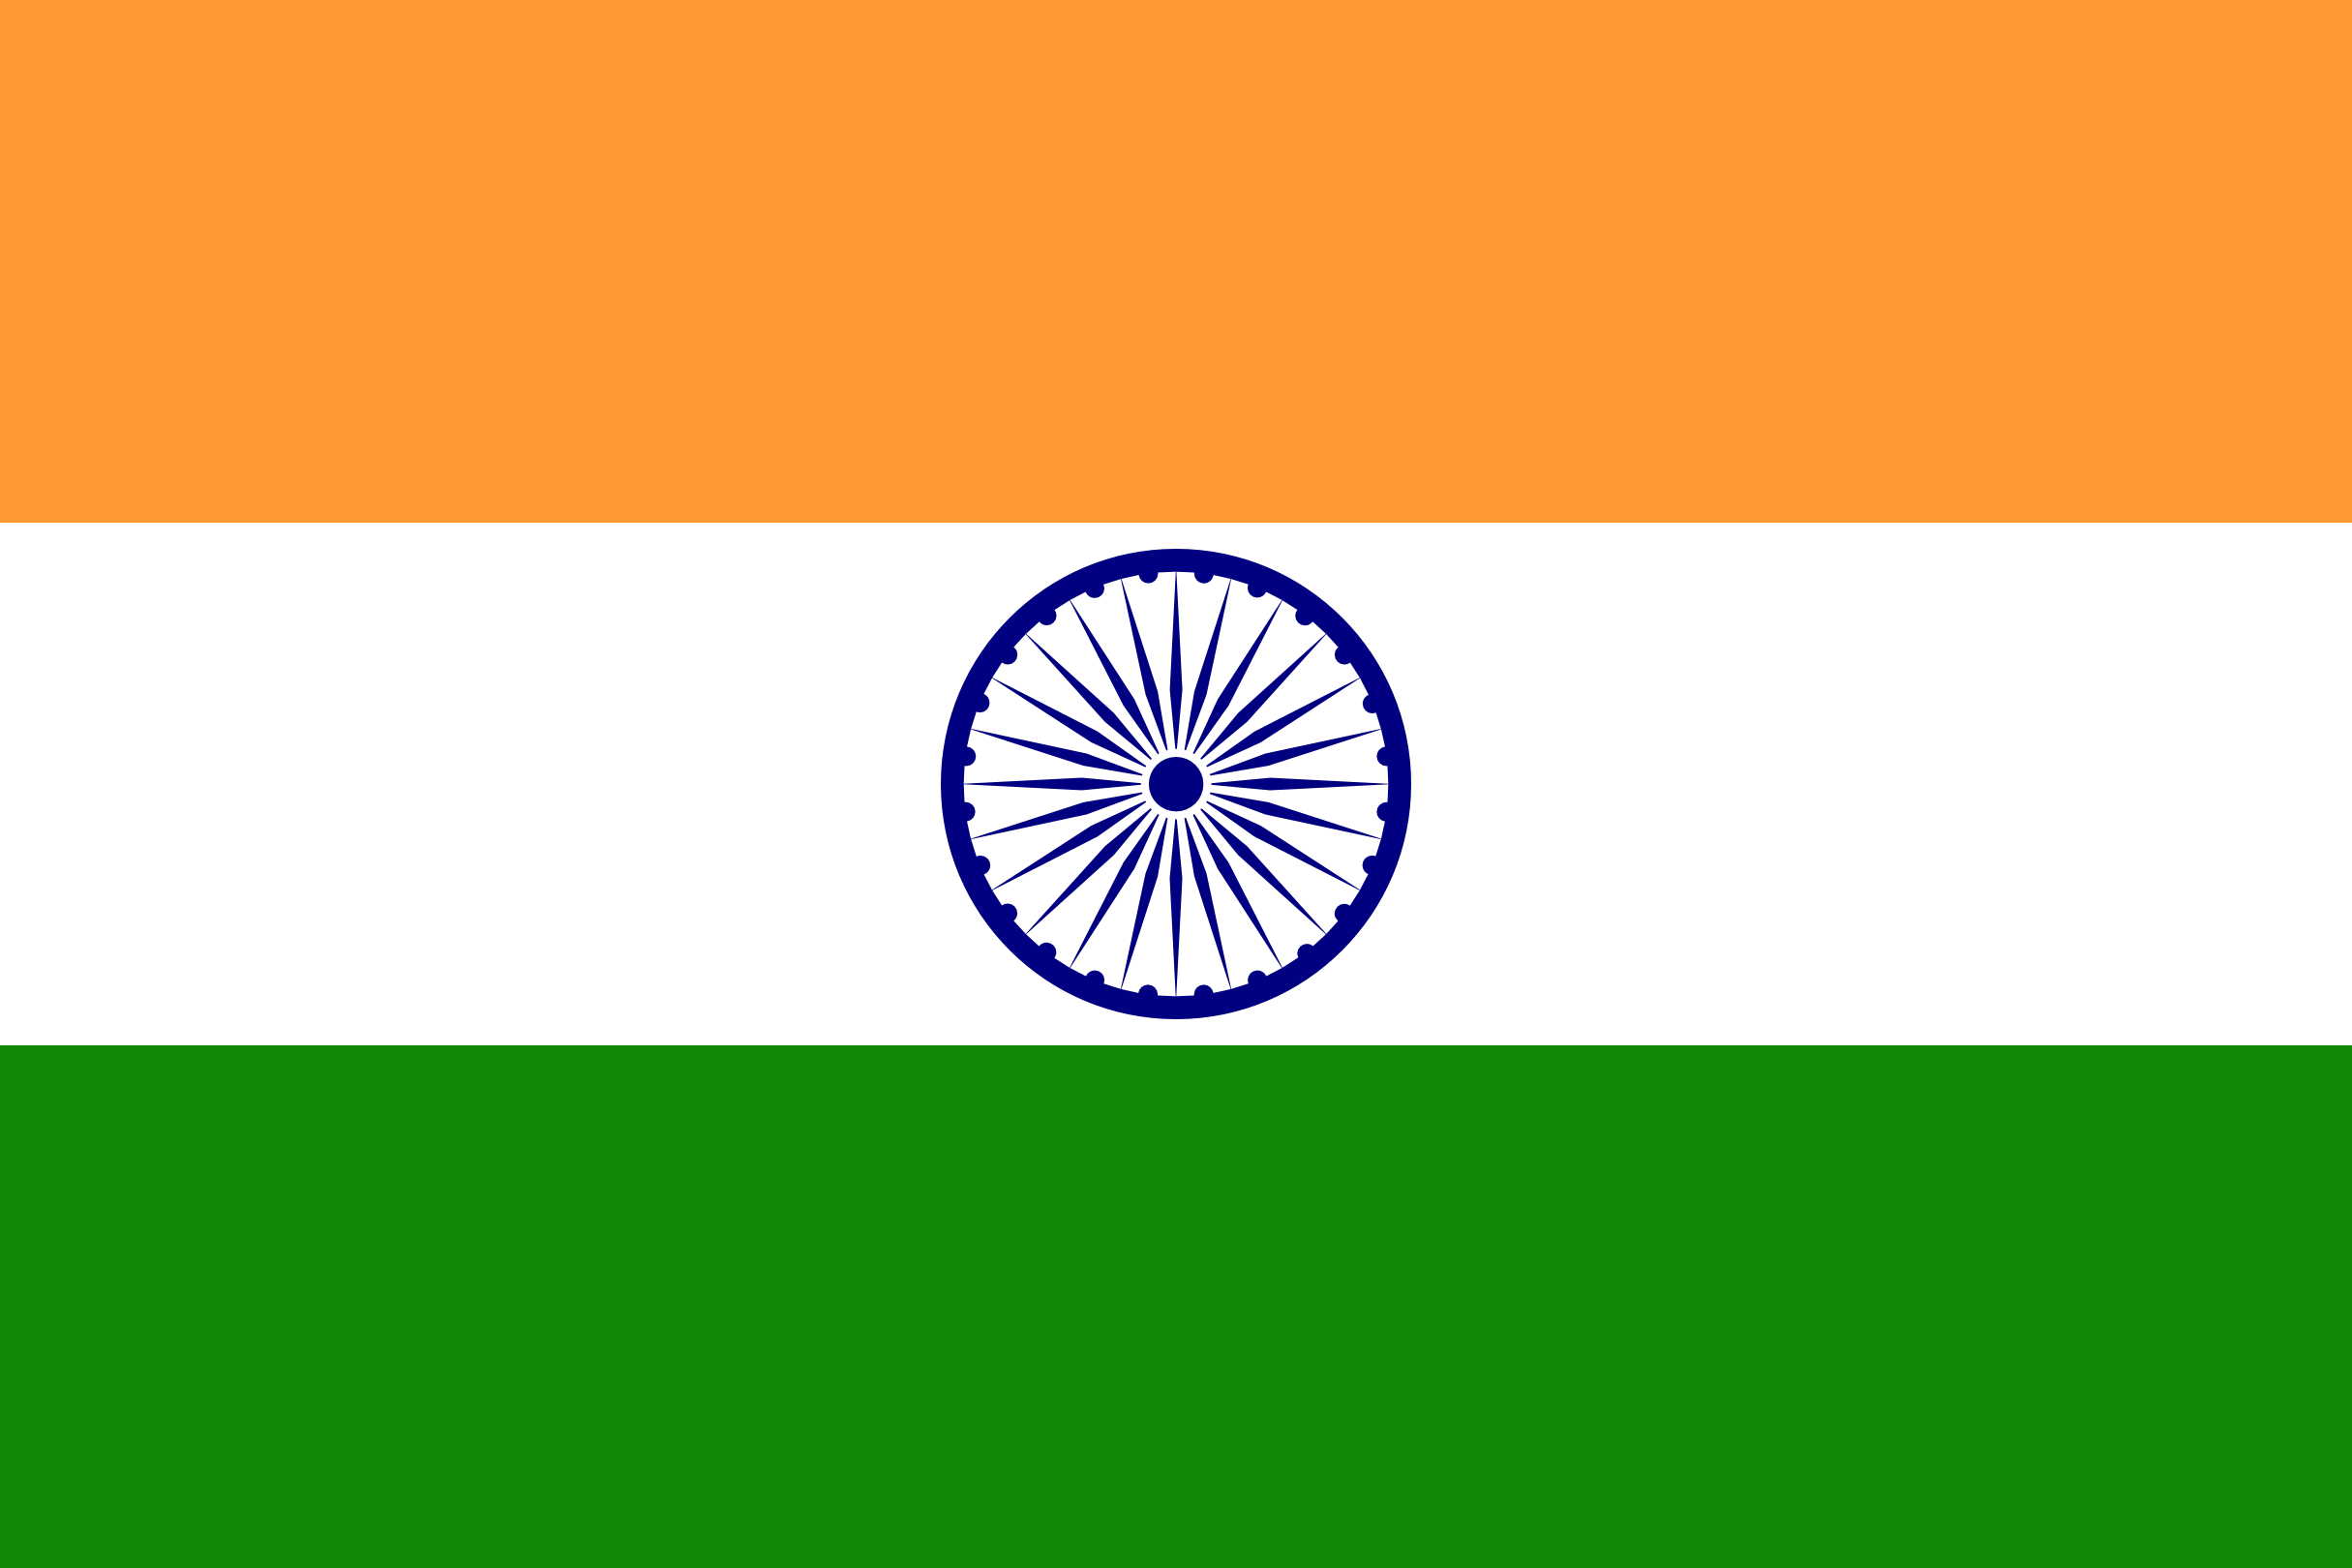 پرچم هندوستان